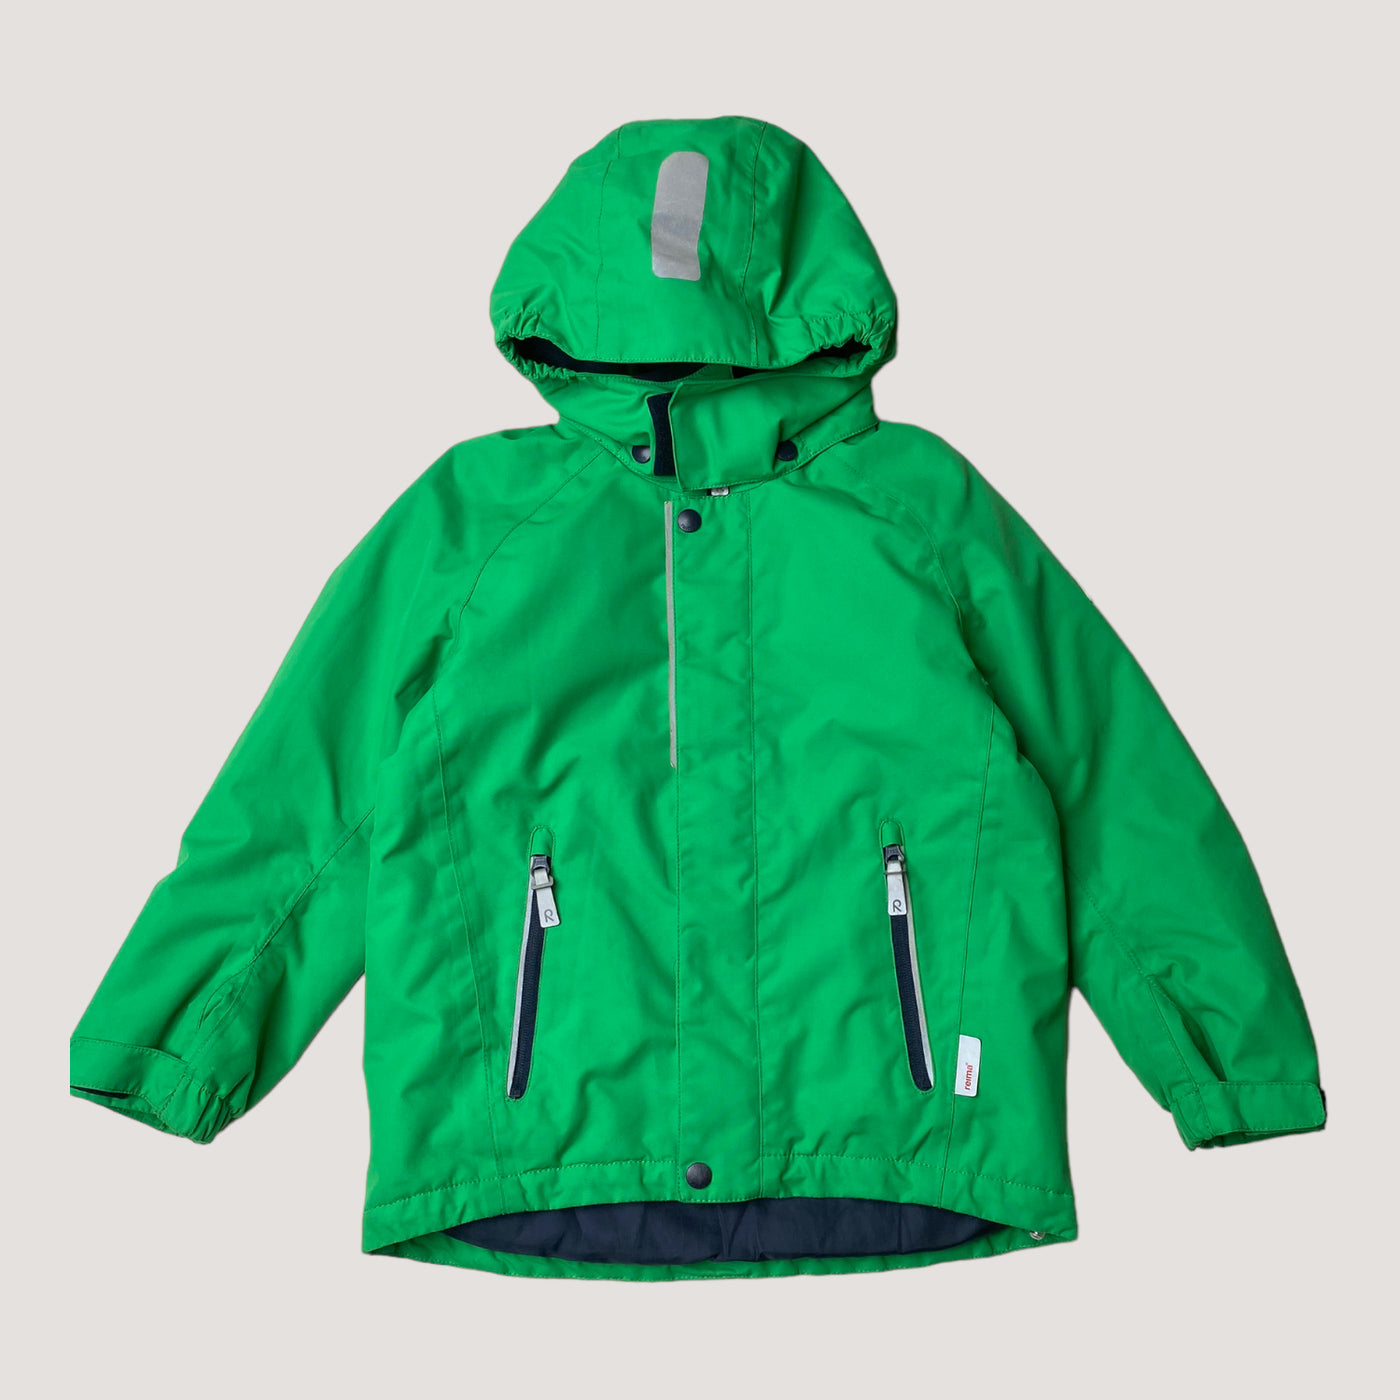 Reima winter jacket, green | 128cm